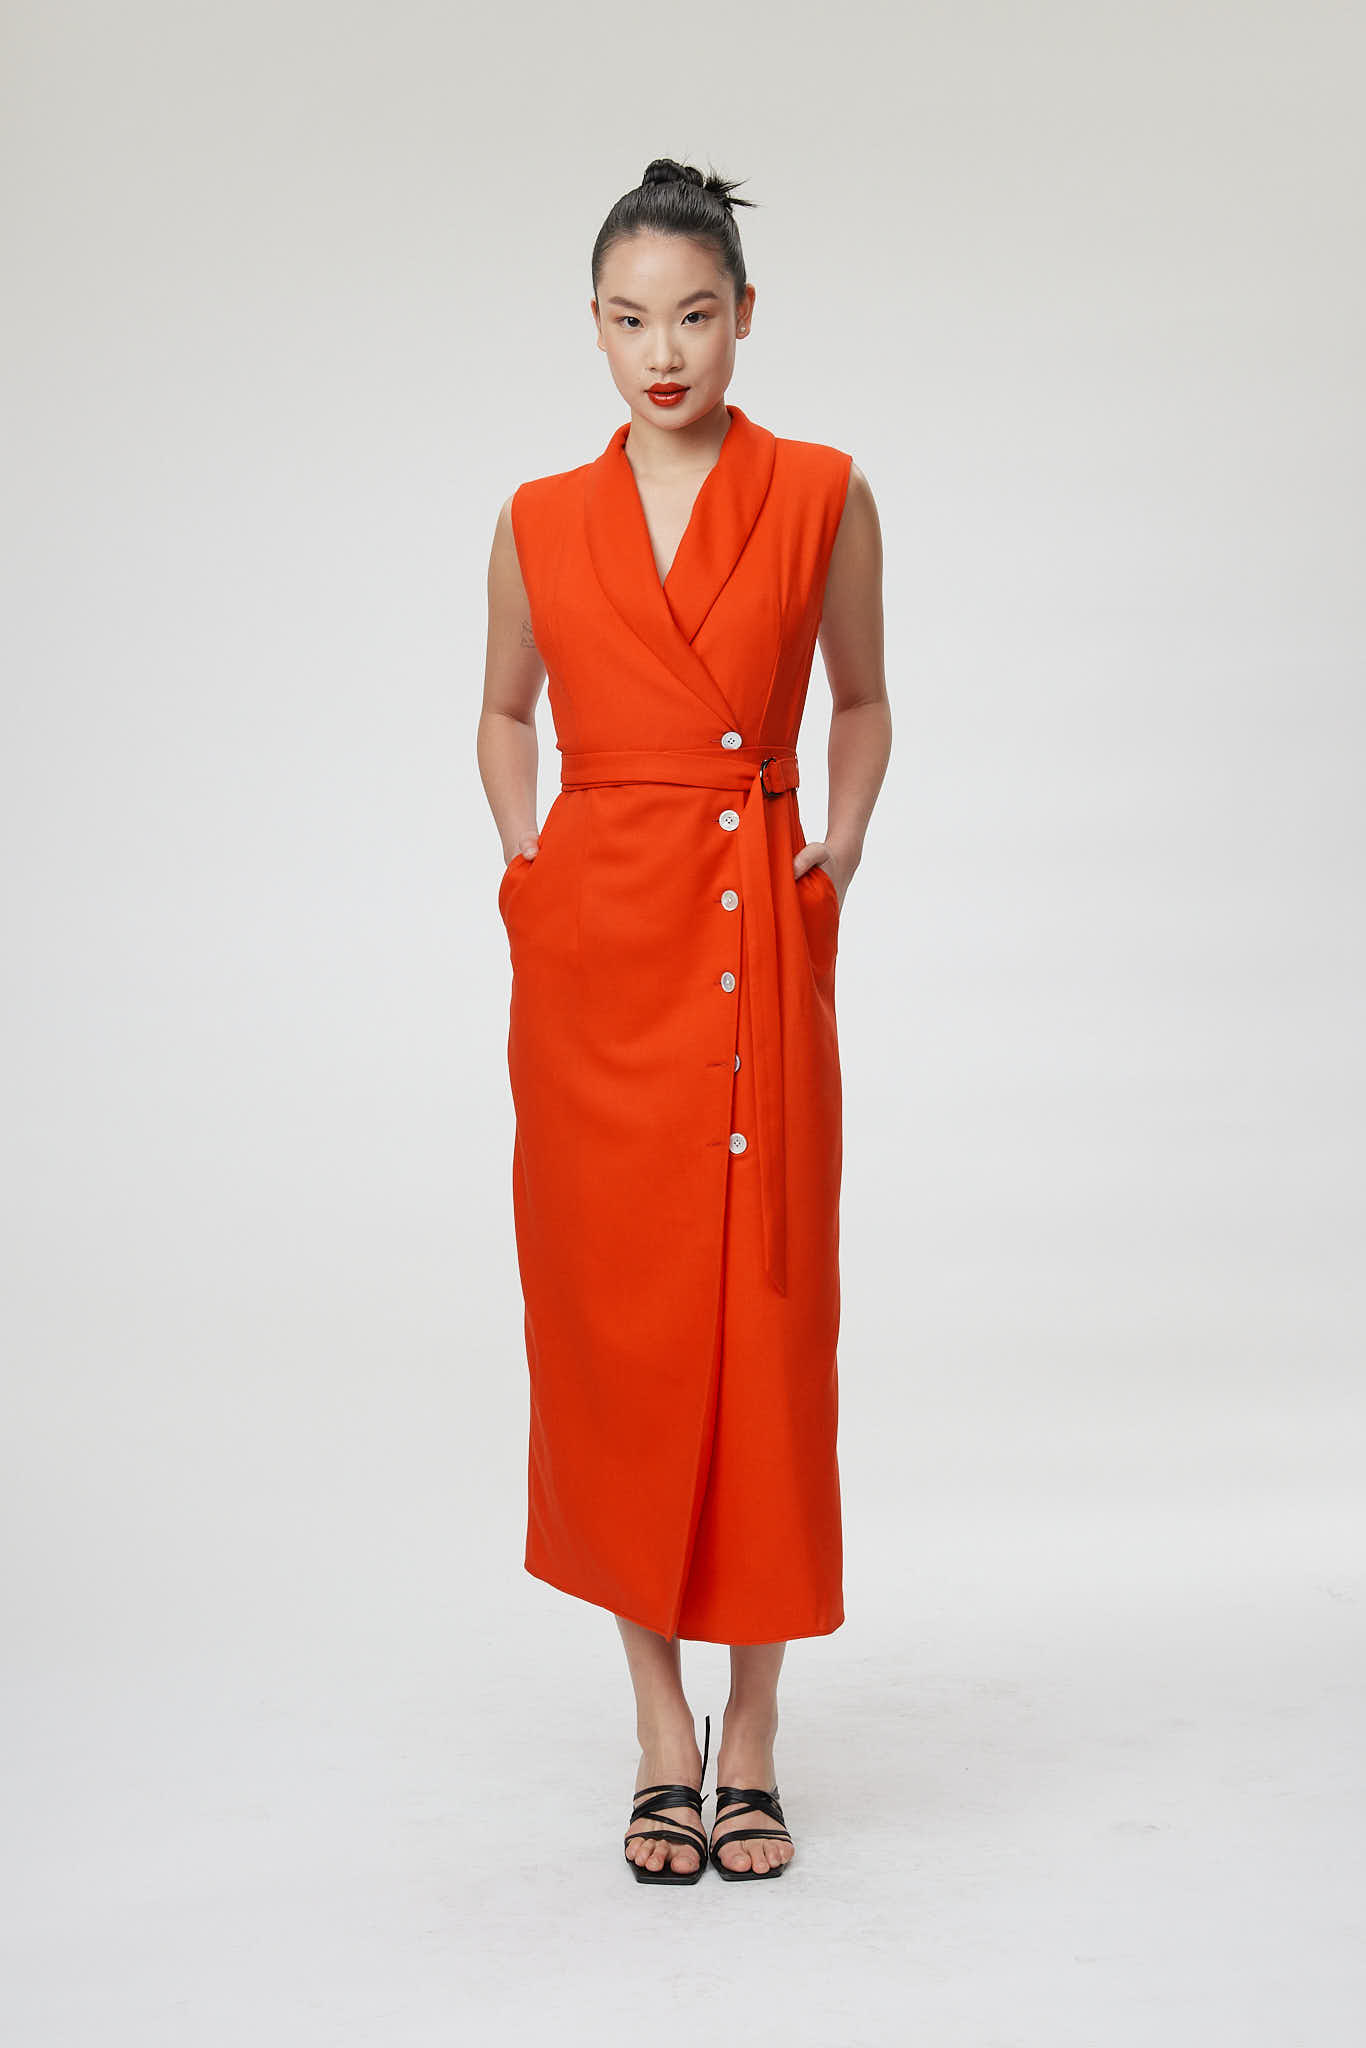 Genoa Dress – Maxi wrap dress in poppy red